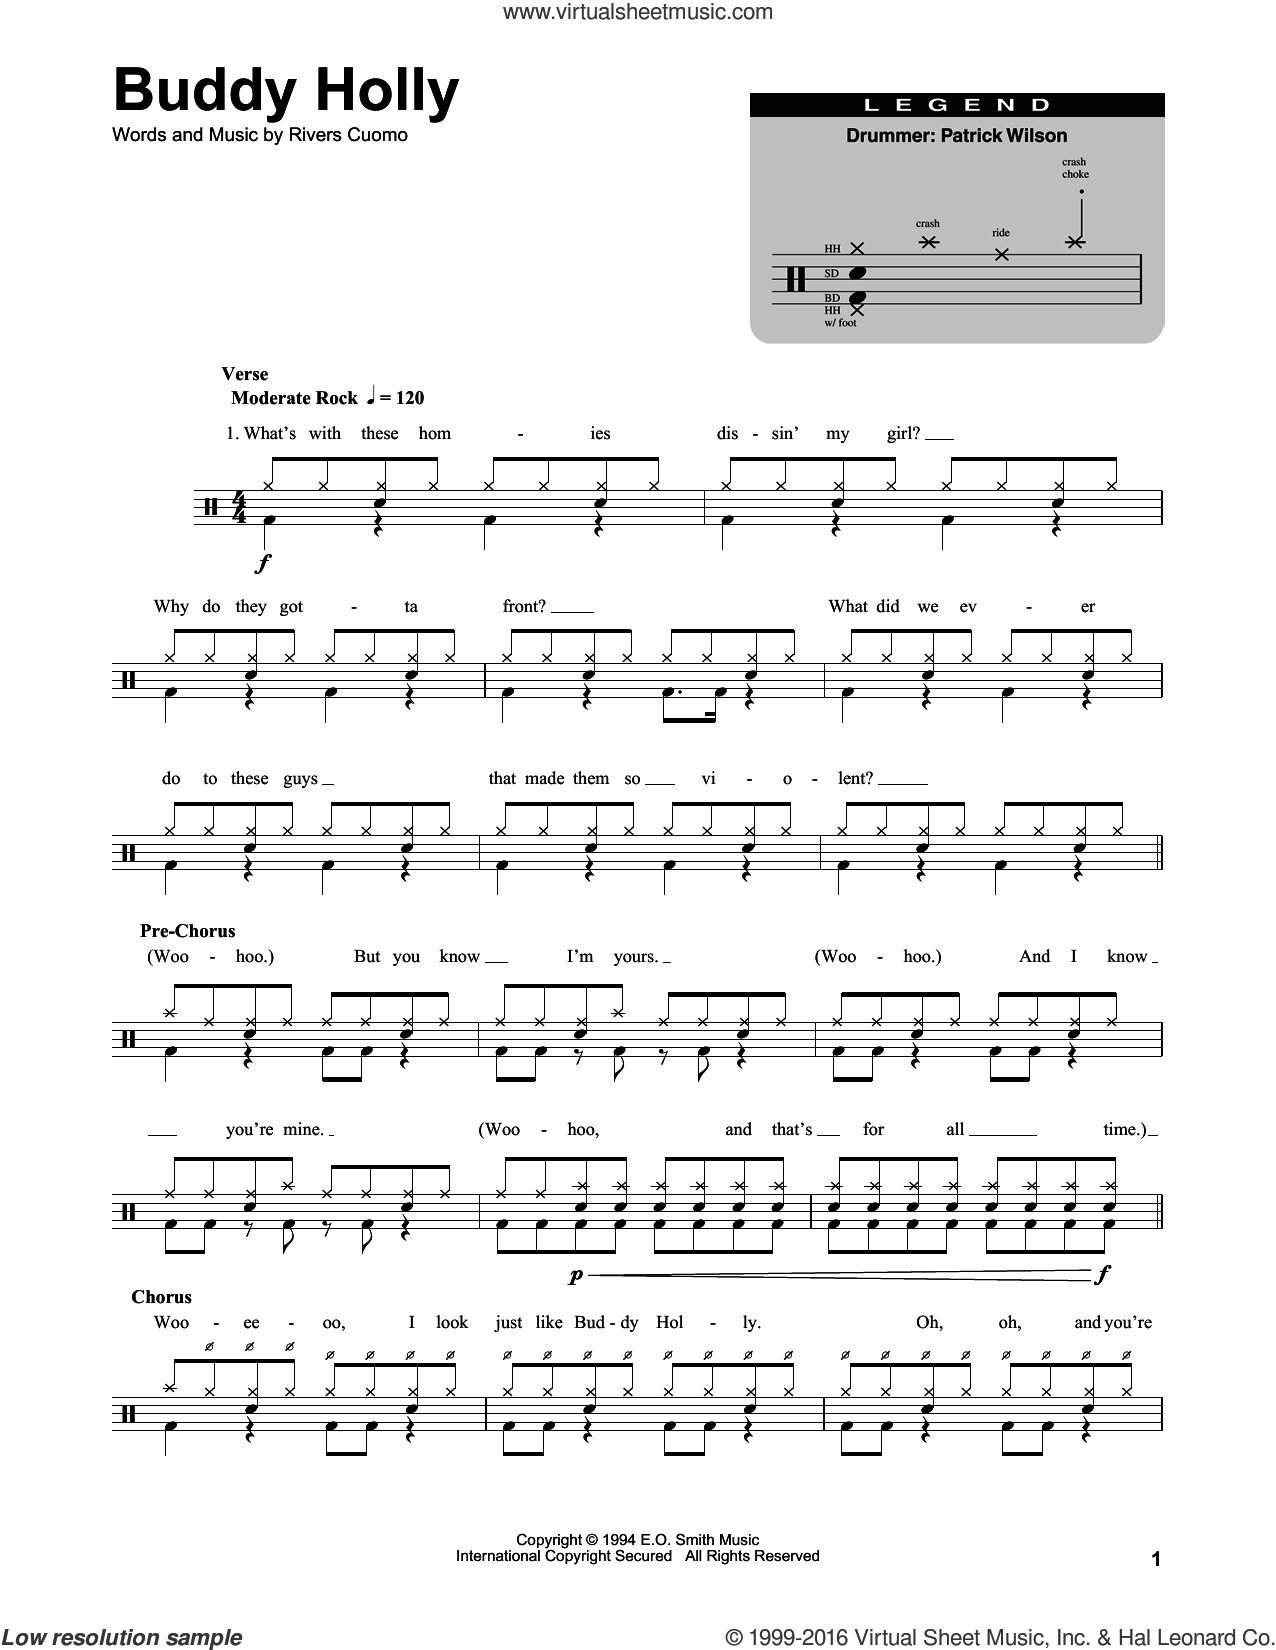 Undone - The Sweater Song (Weezer) - Advanced Piano Sheet Music